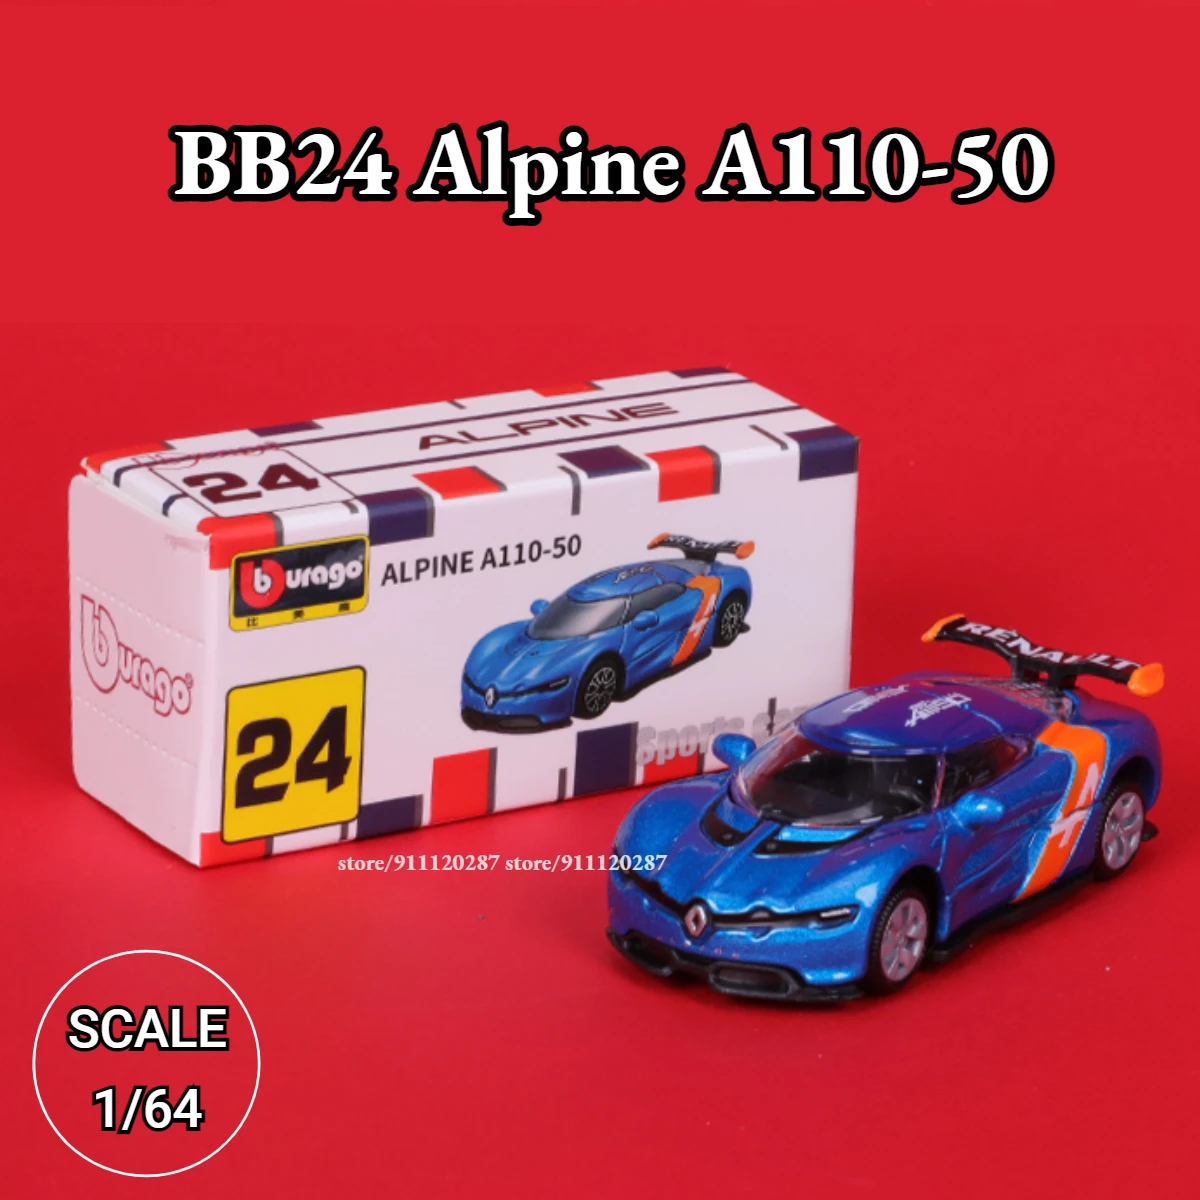 

Bburago 1/64 Mini Car Model, BB24 Alpine A110-50 Scale Miniature Art Diecast Vehicle Replica Collection Toy